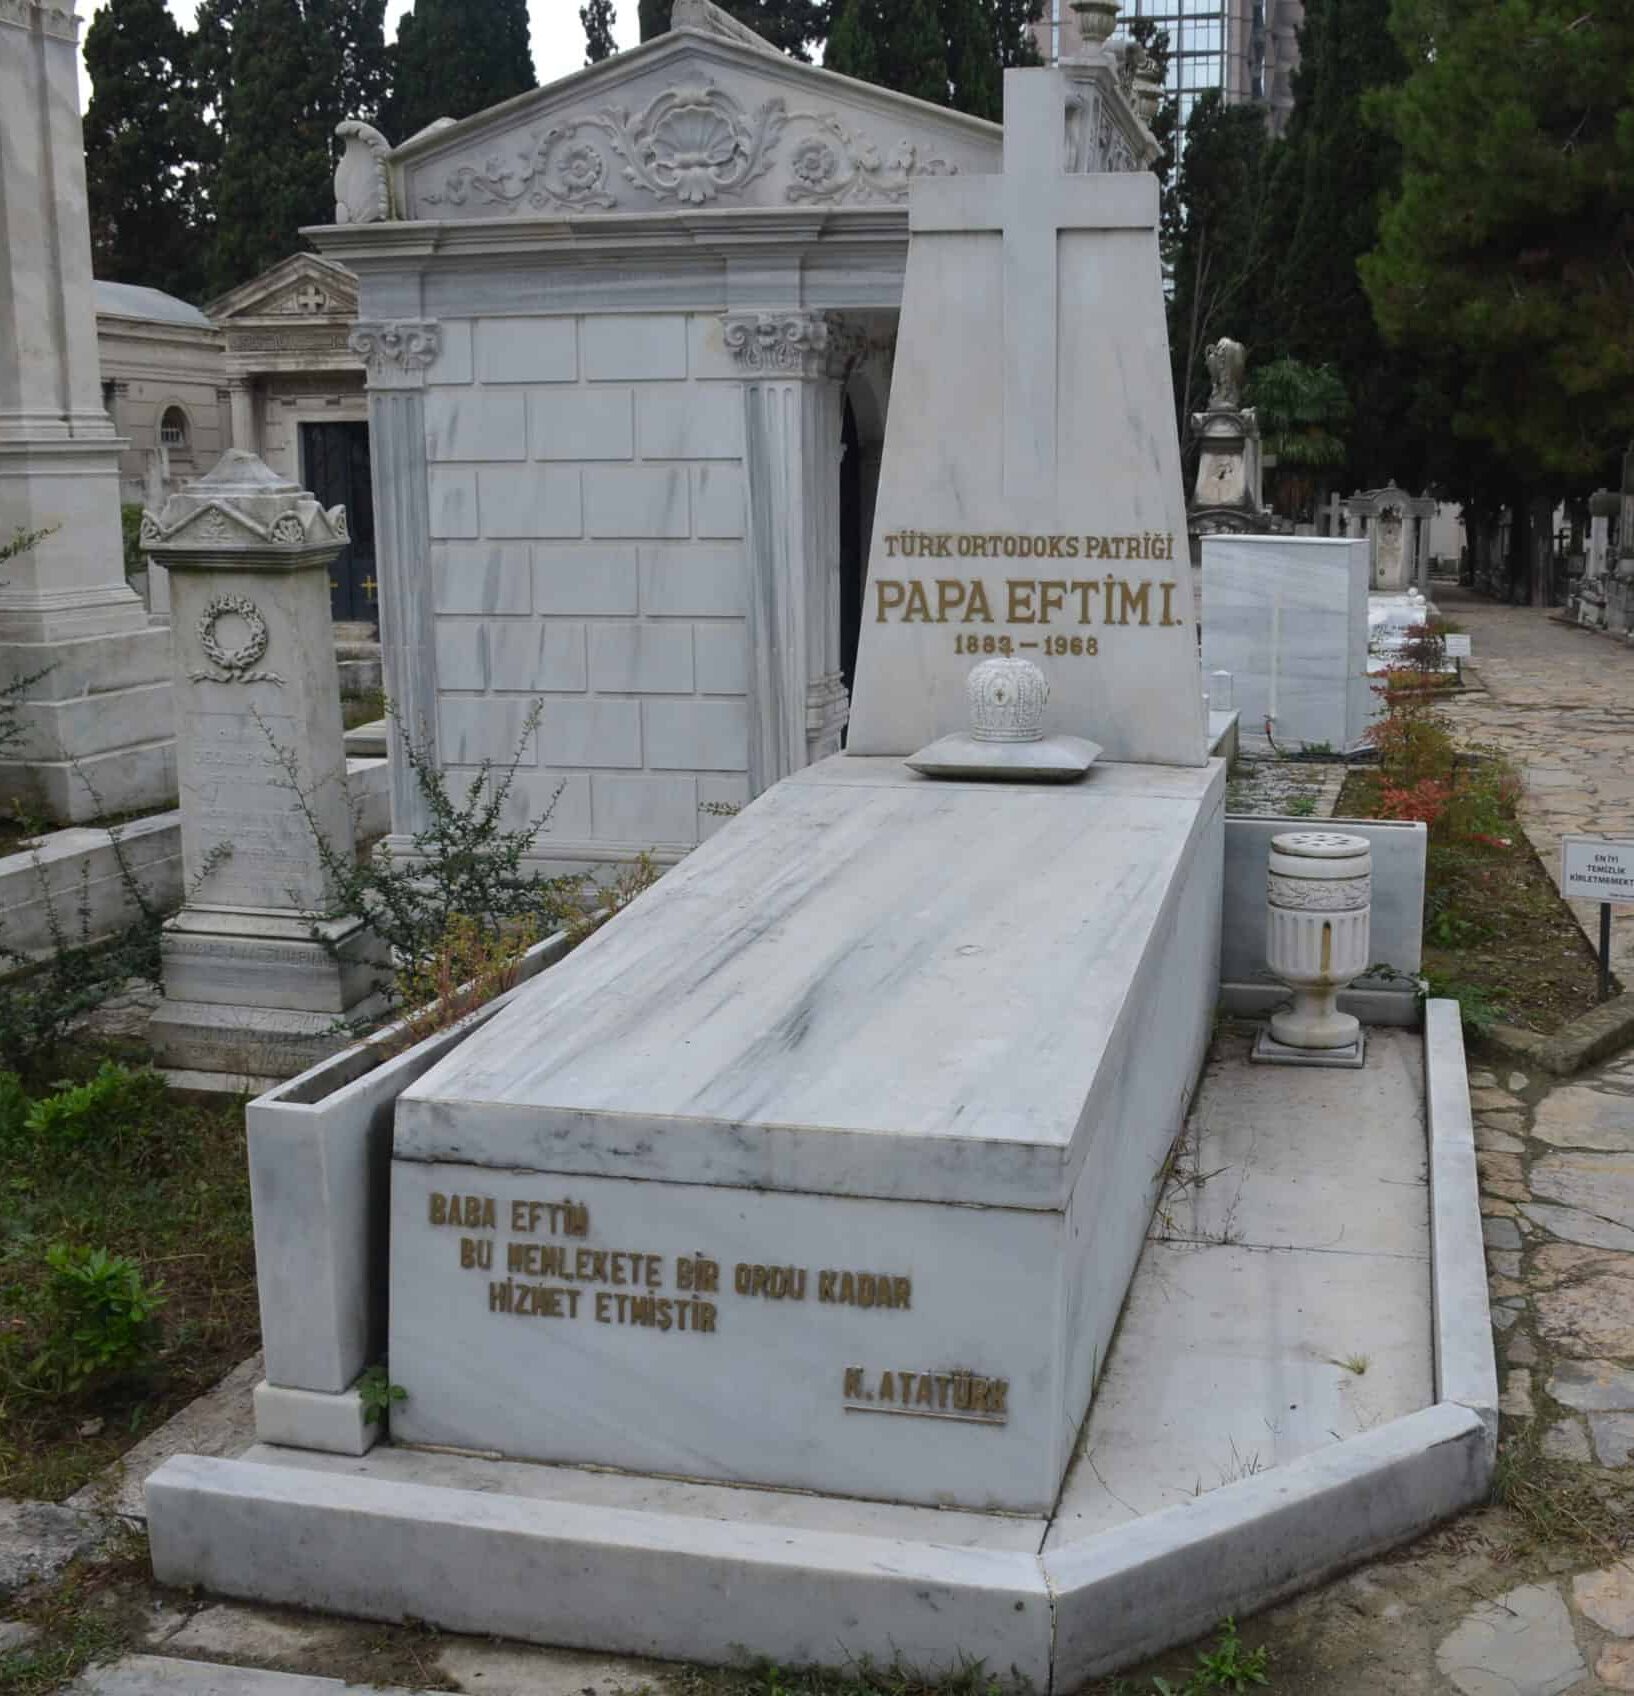 Tomb of Papa Eftim I at the Greek Orthodox Cemetery in Şişli, Istanbul, Turkey